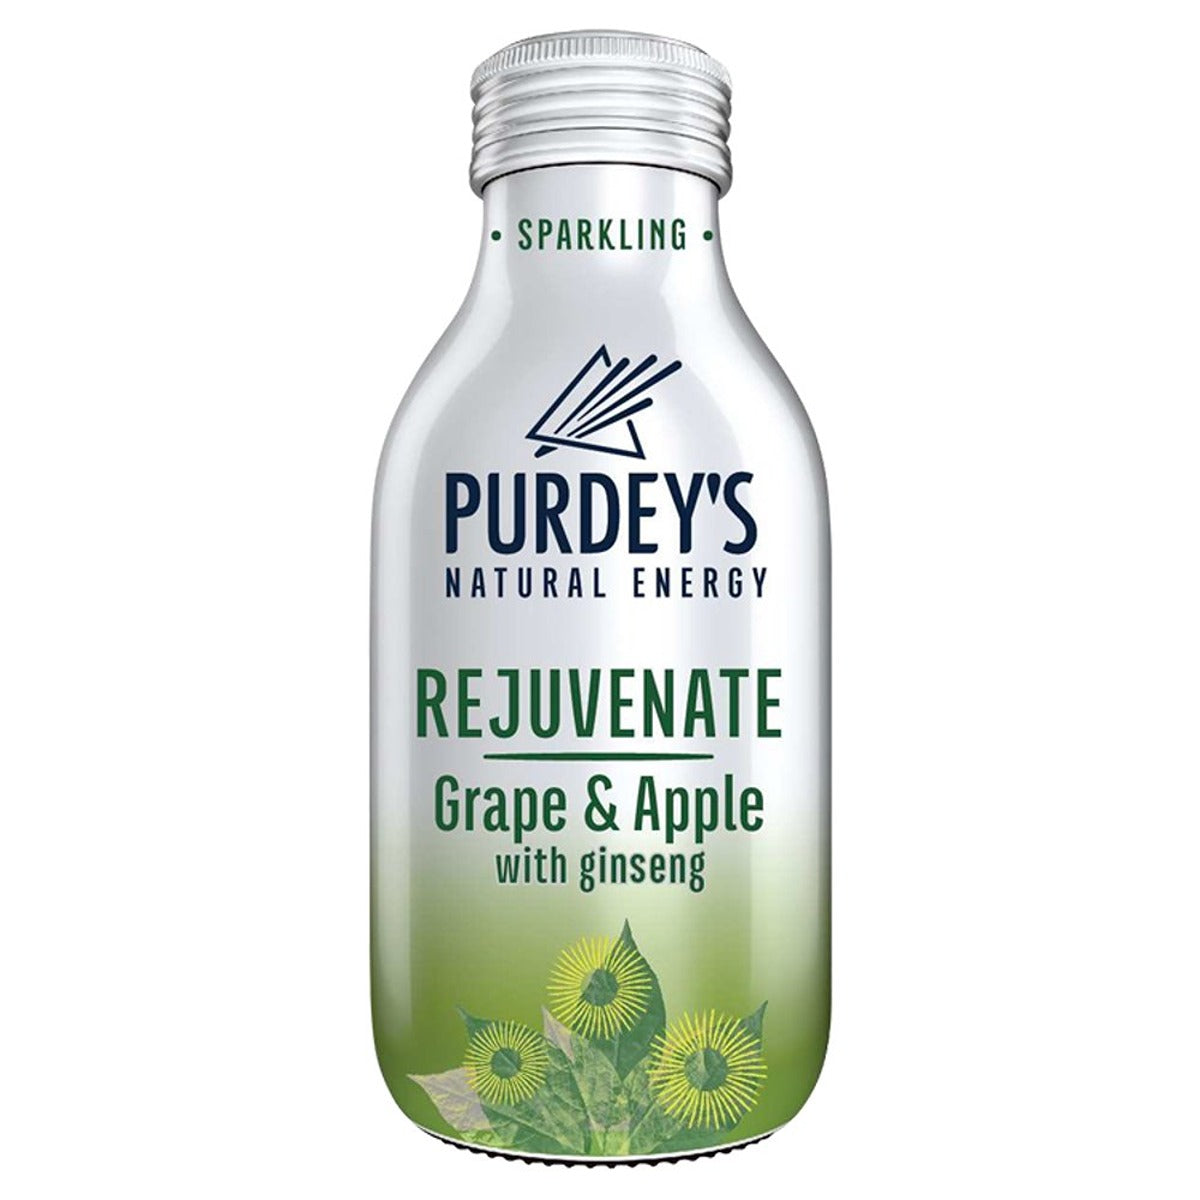 Purdey's - Natural Energy Rejuvenate Grape & Apple with Ginseng Bottle - 330ml juice.